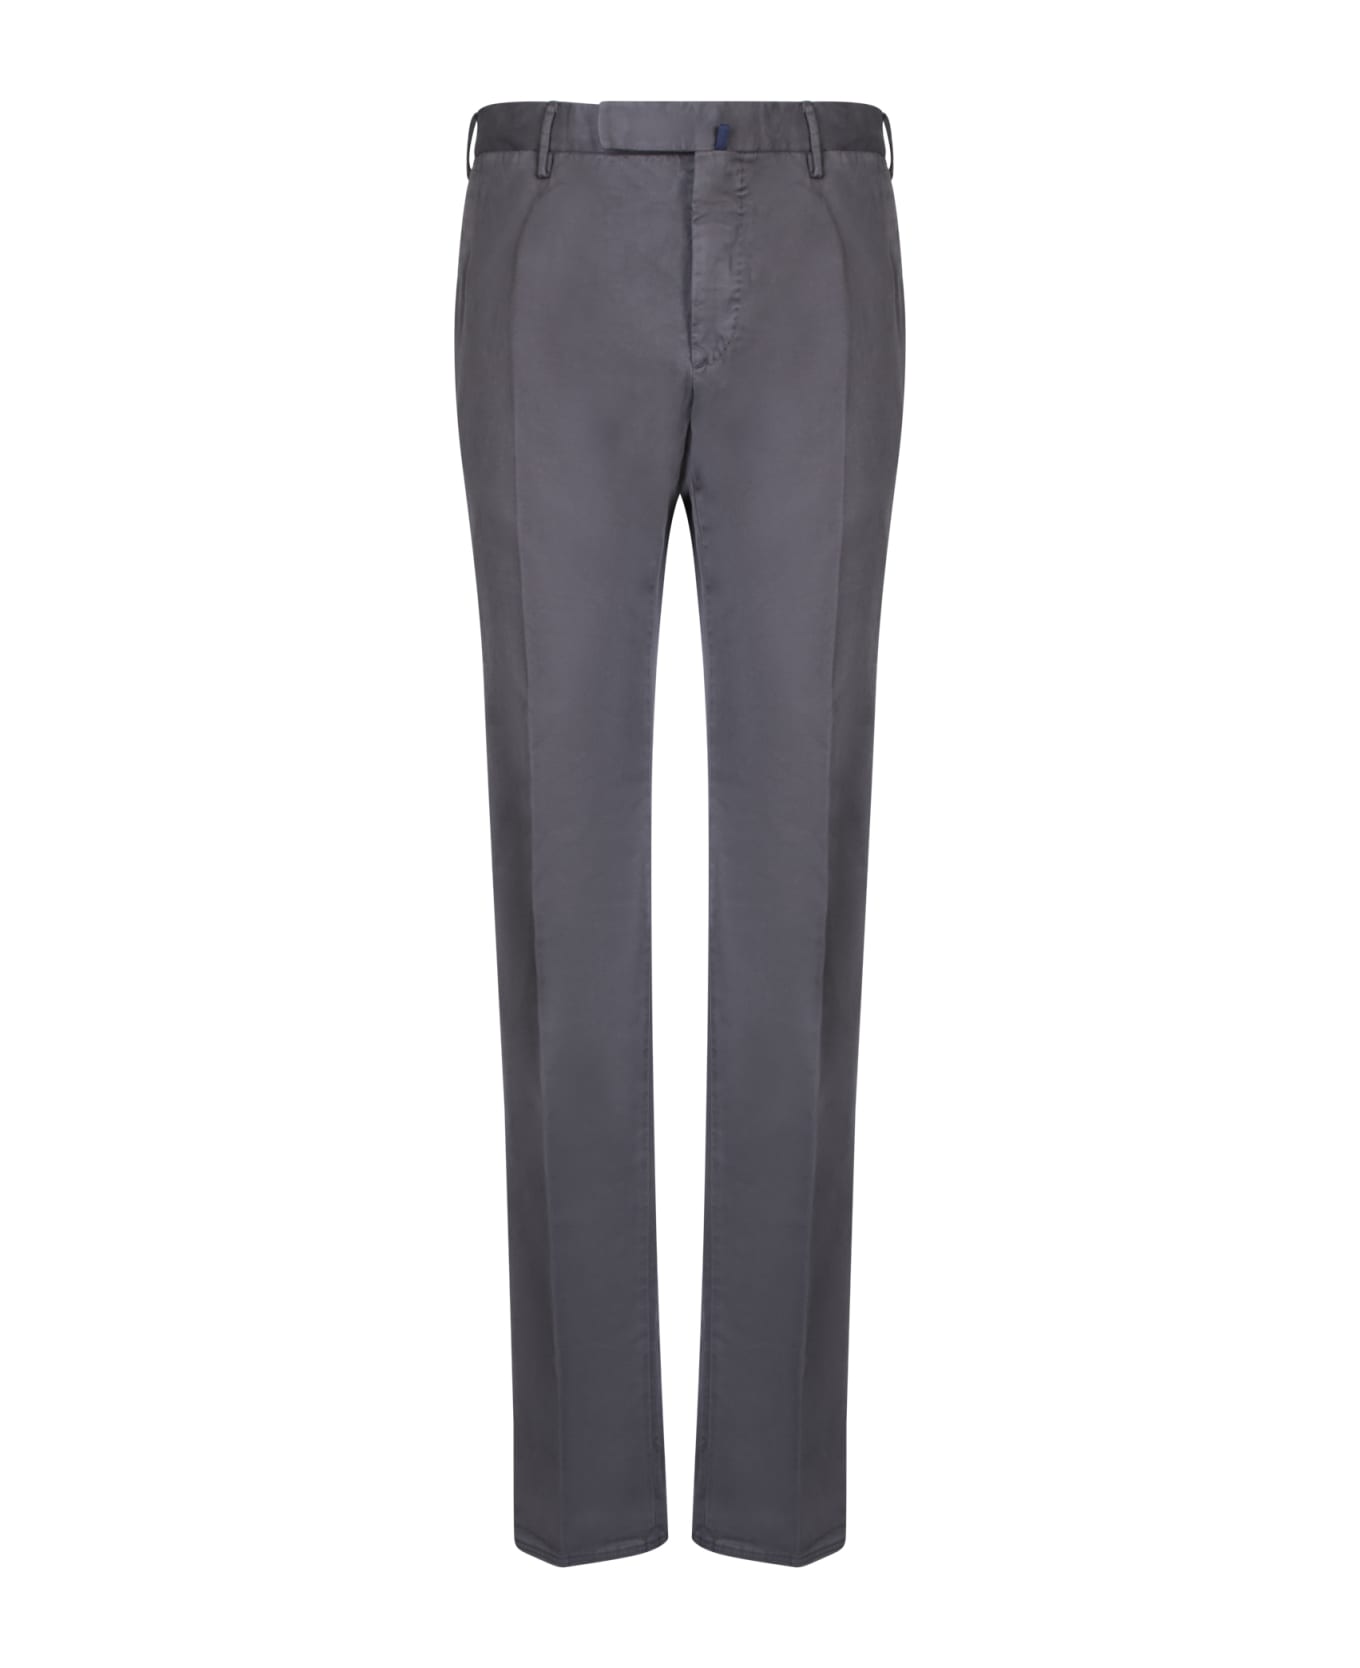 Incotex Slim Fit Grey Trousers - Grey